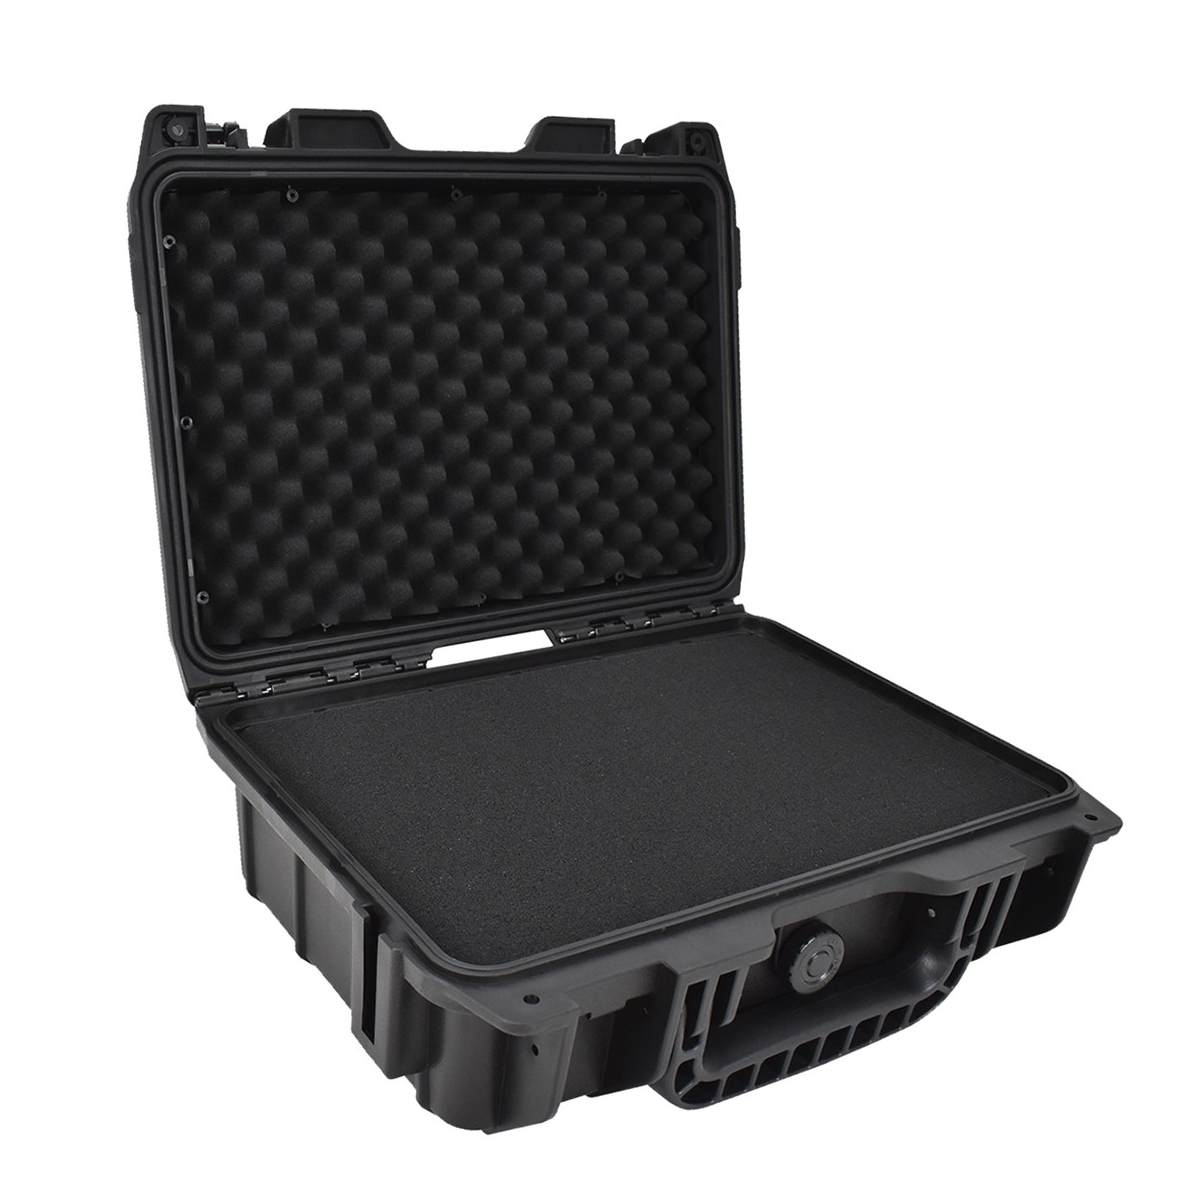 Flight cases utilitaires - Power Acoustics - Flight cases - IP65 CASE 07